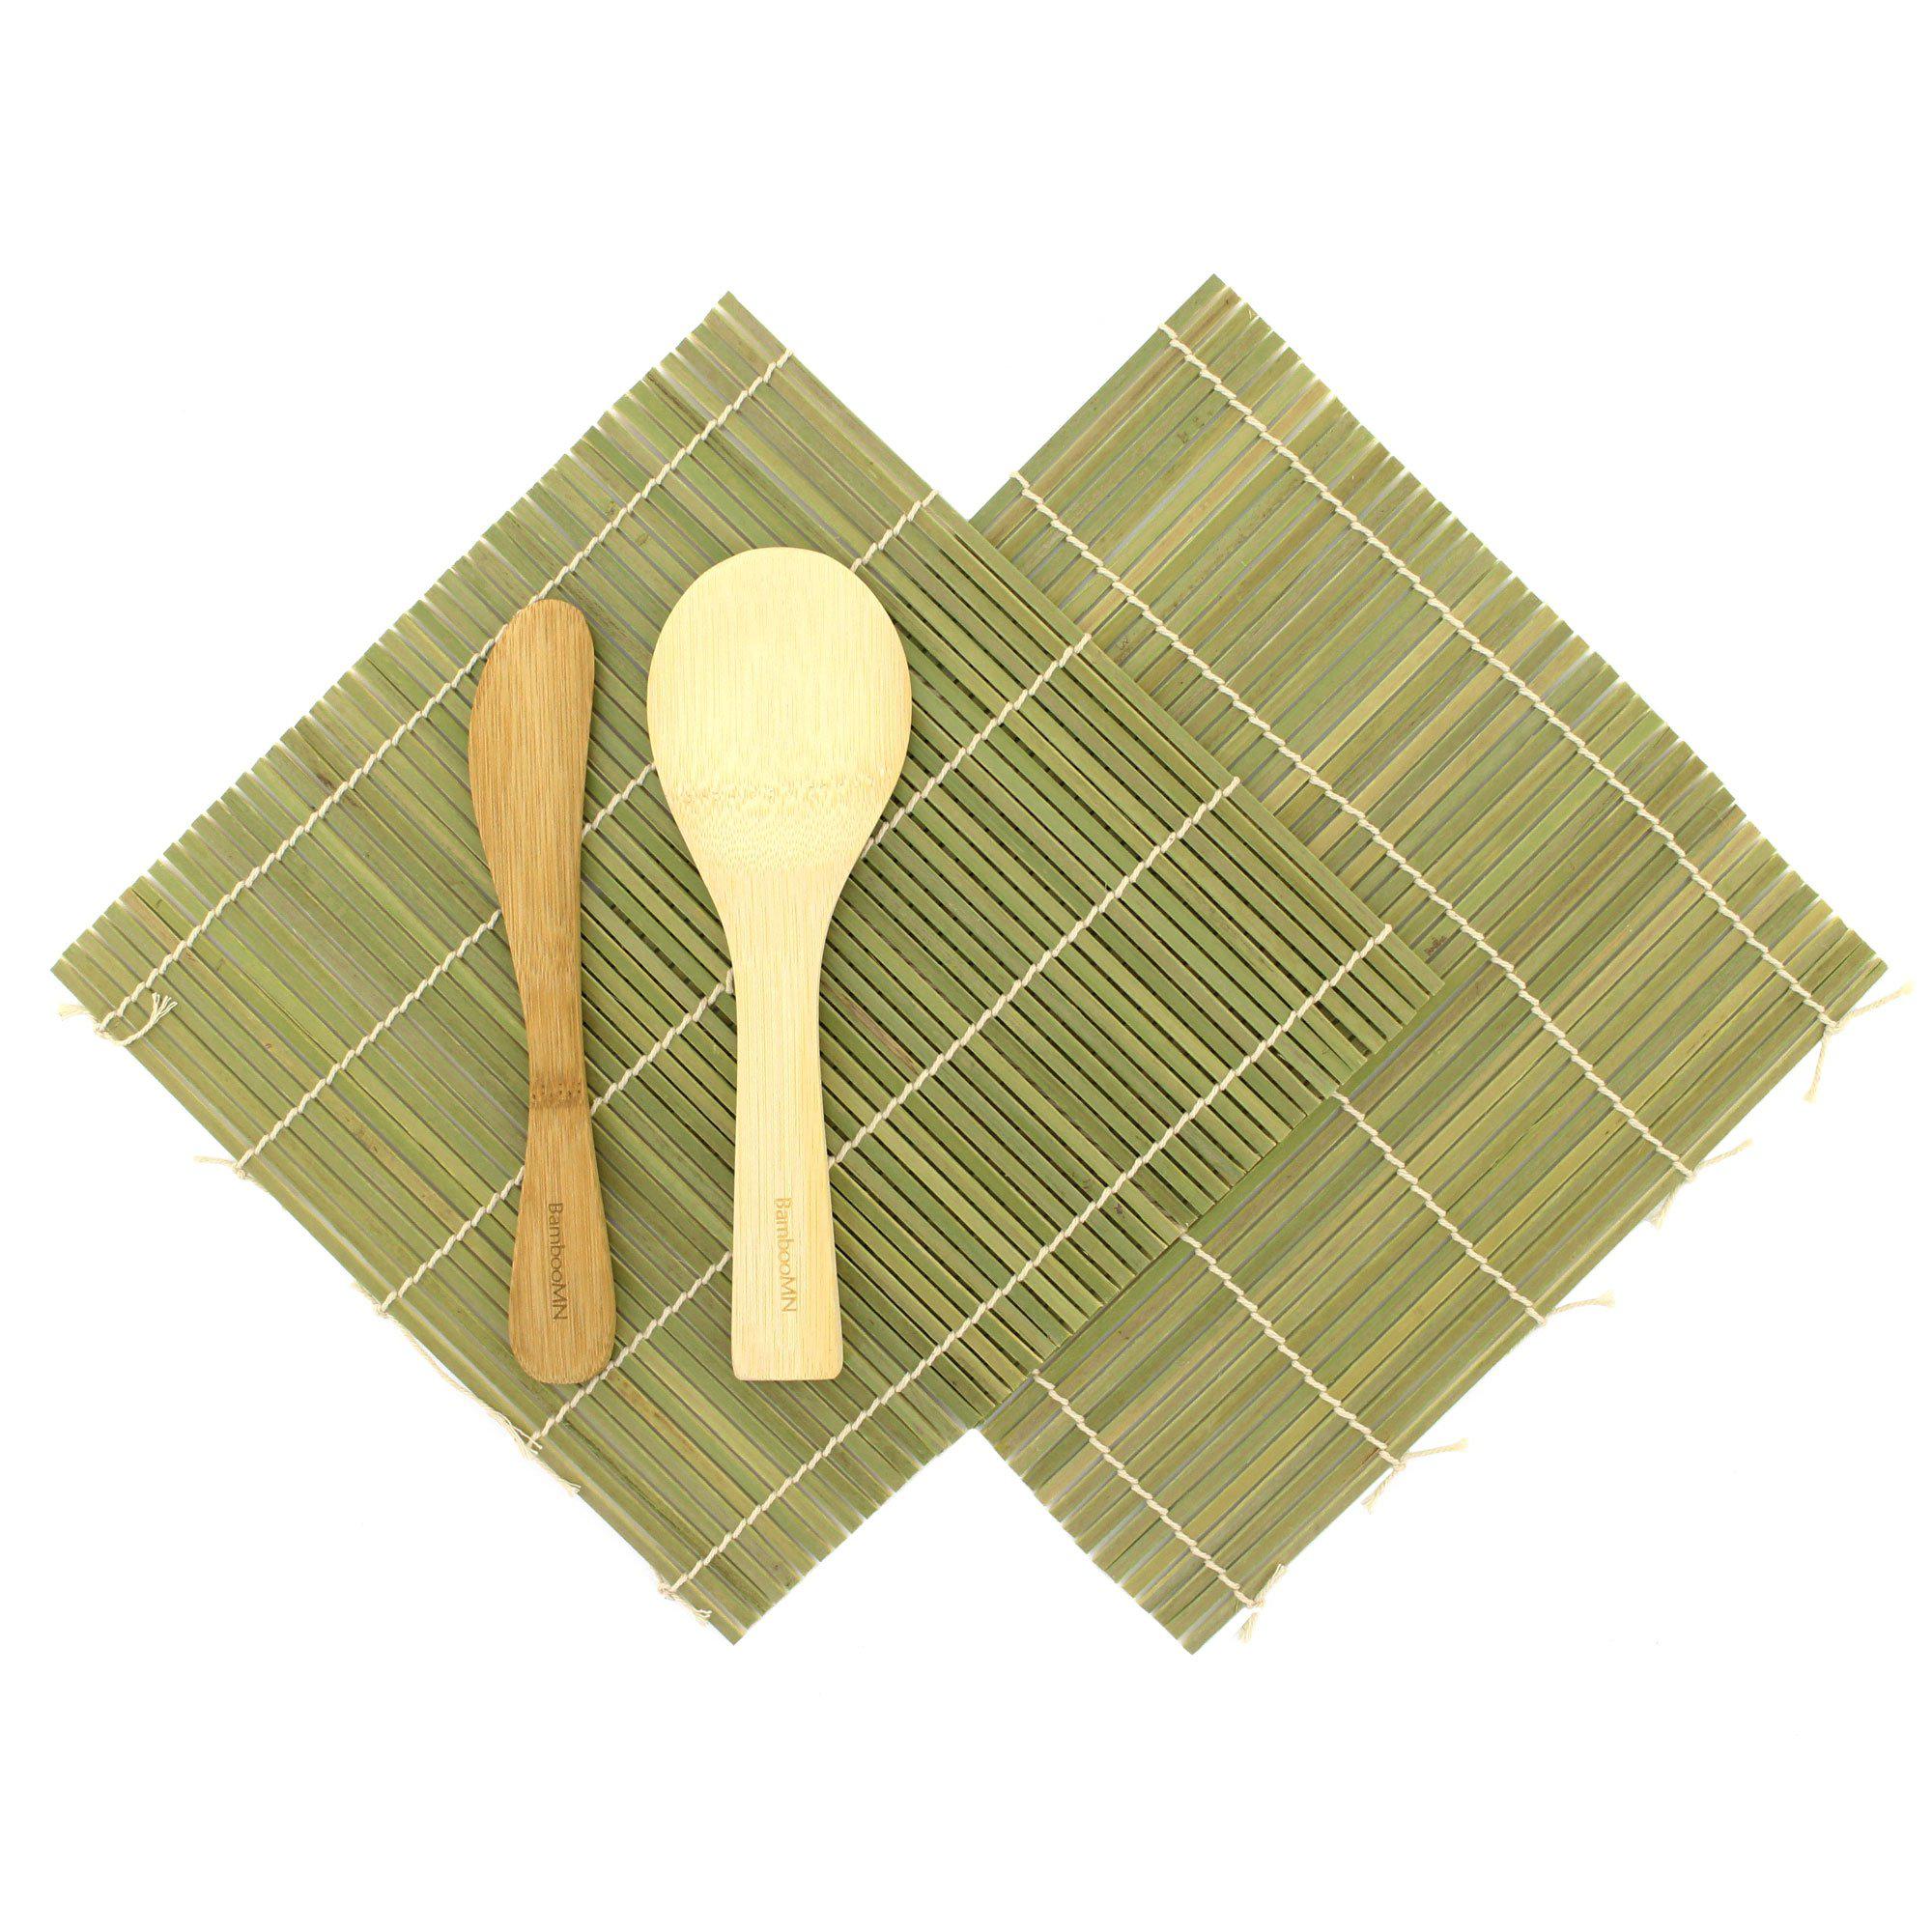 bamboomn sushi making kit 2x green bamboo rolling mats, 1x rice paddle, 1x spreader | 100% bamboo mats and utensils